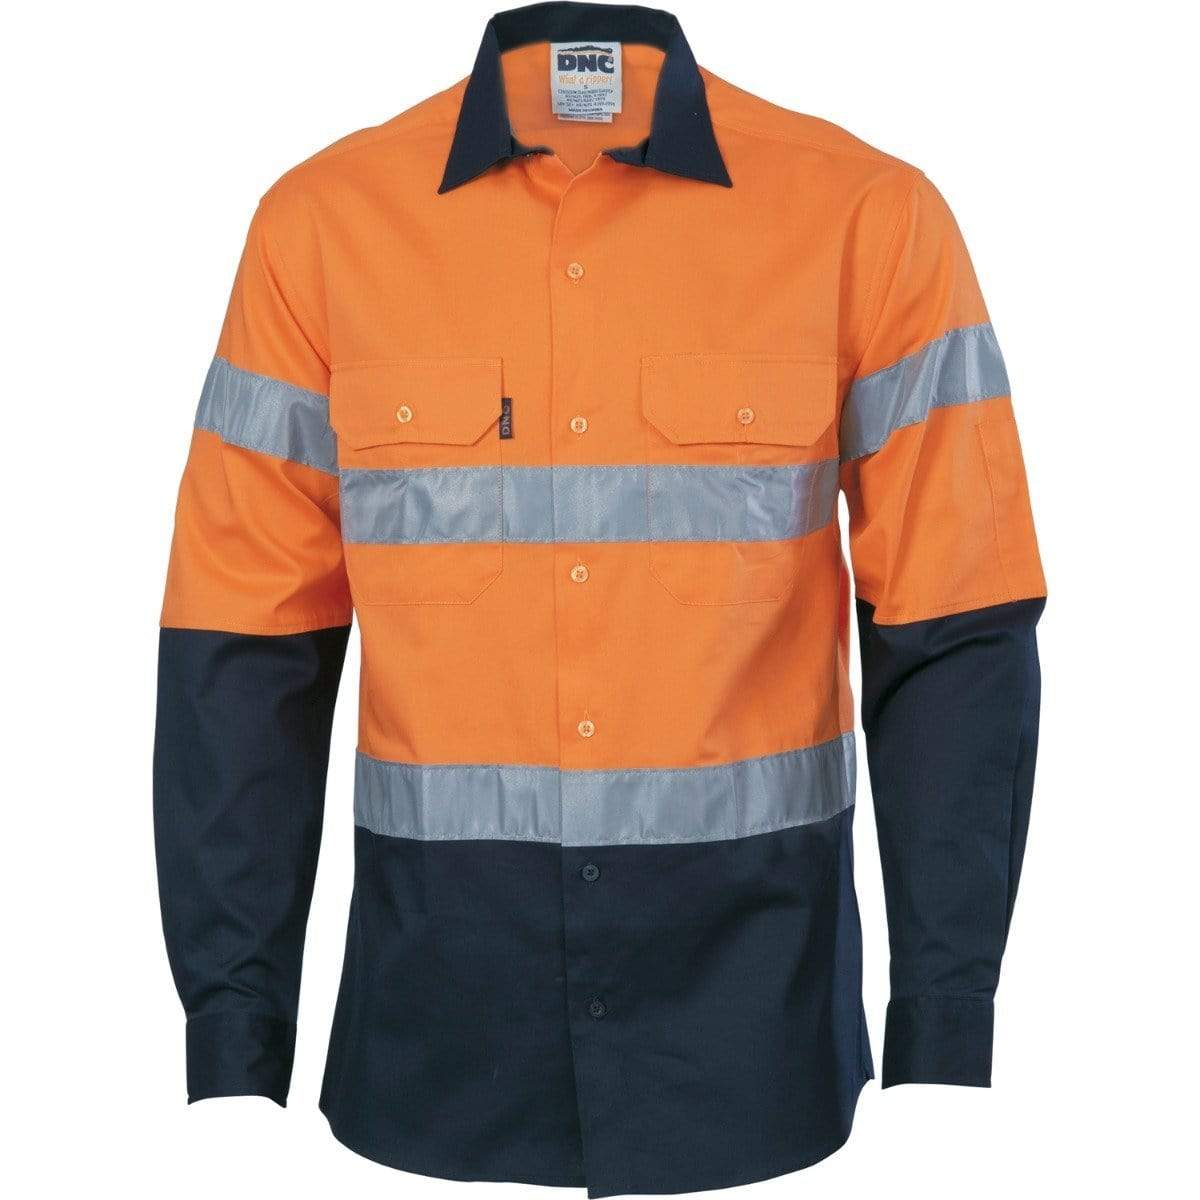 DNC Workwear Work Wear DNC WORKWEAR Hi-Vis Cool-Breeze Long Sleeve Cotton Shirt with Generic Reflective Tape 3966